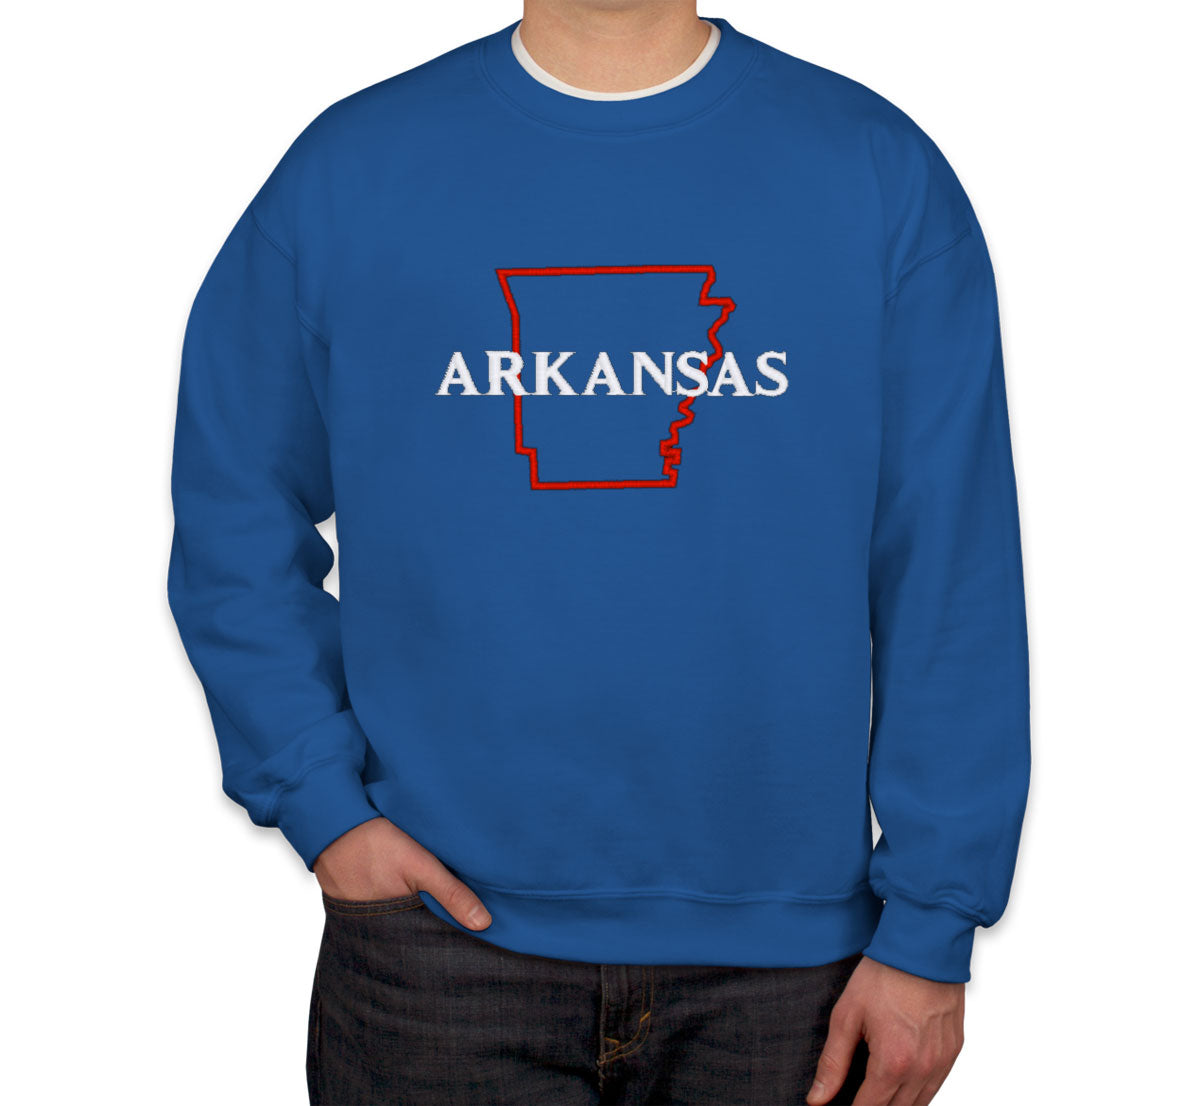 Arkansas Embroidered Unisex Sweatshirt